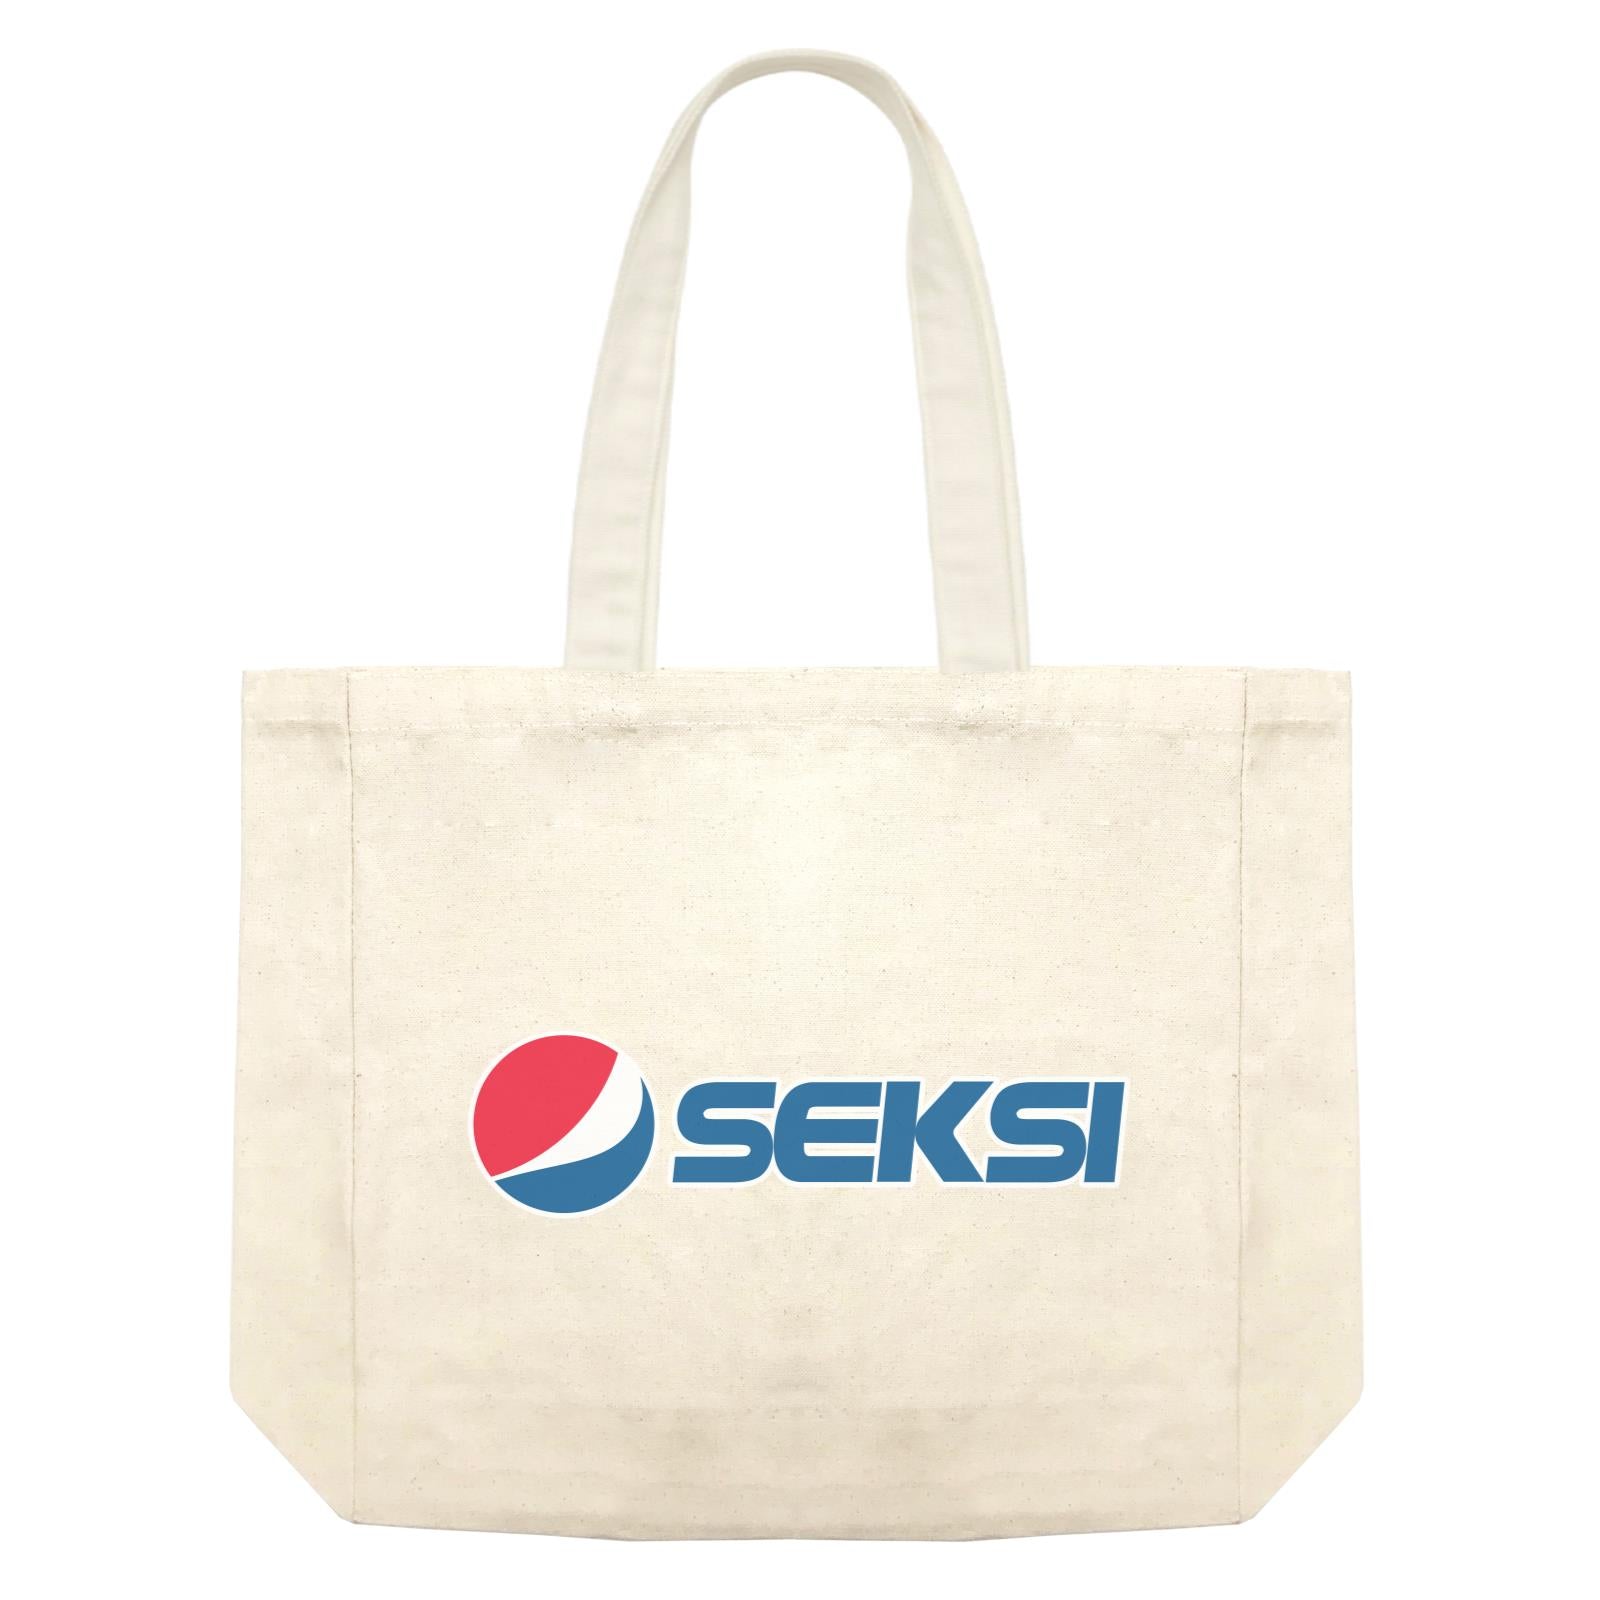 Slang Statement Seksi Accessories Shopping Bag